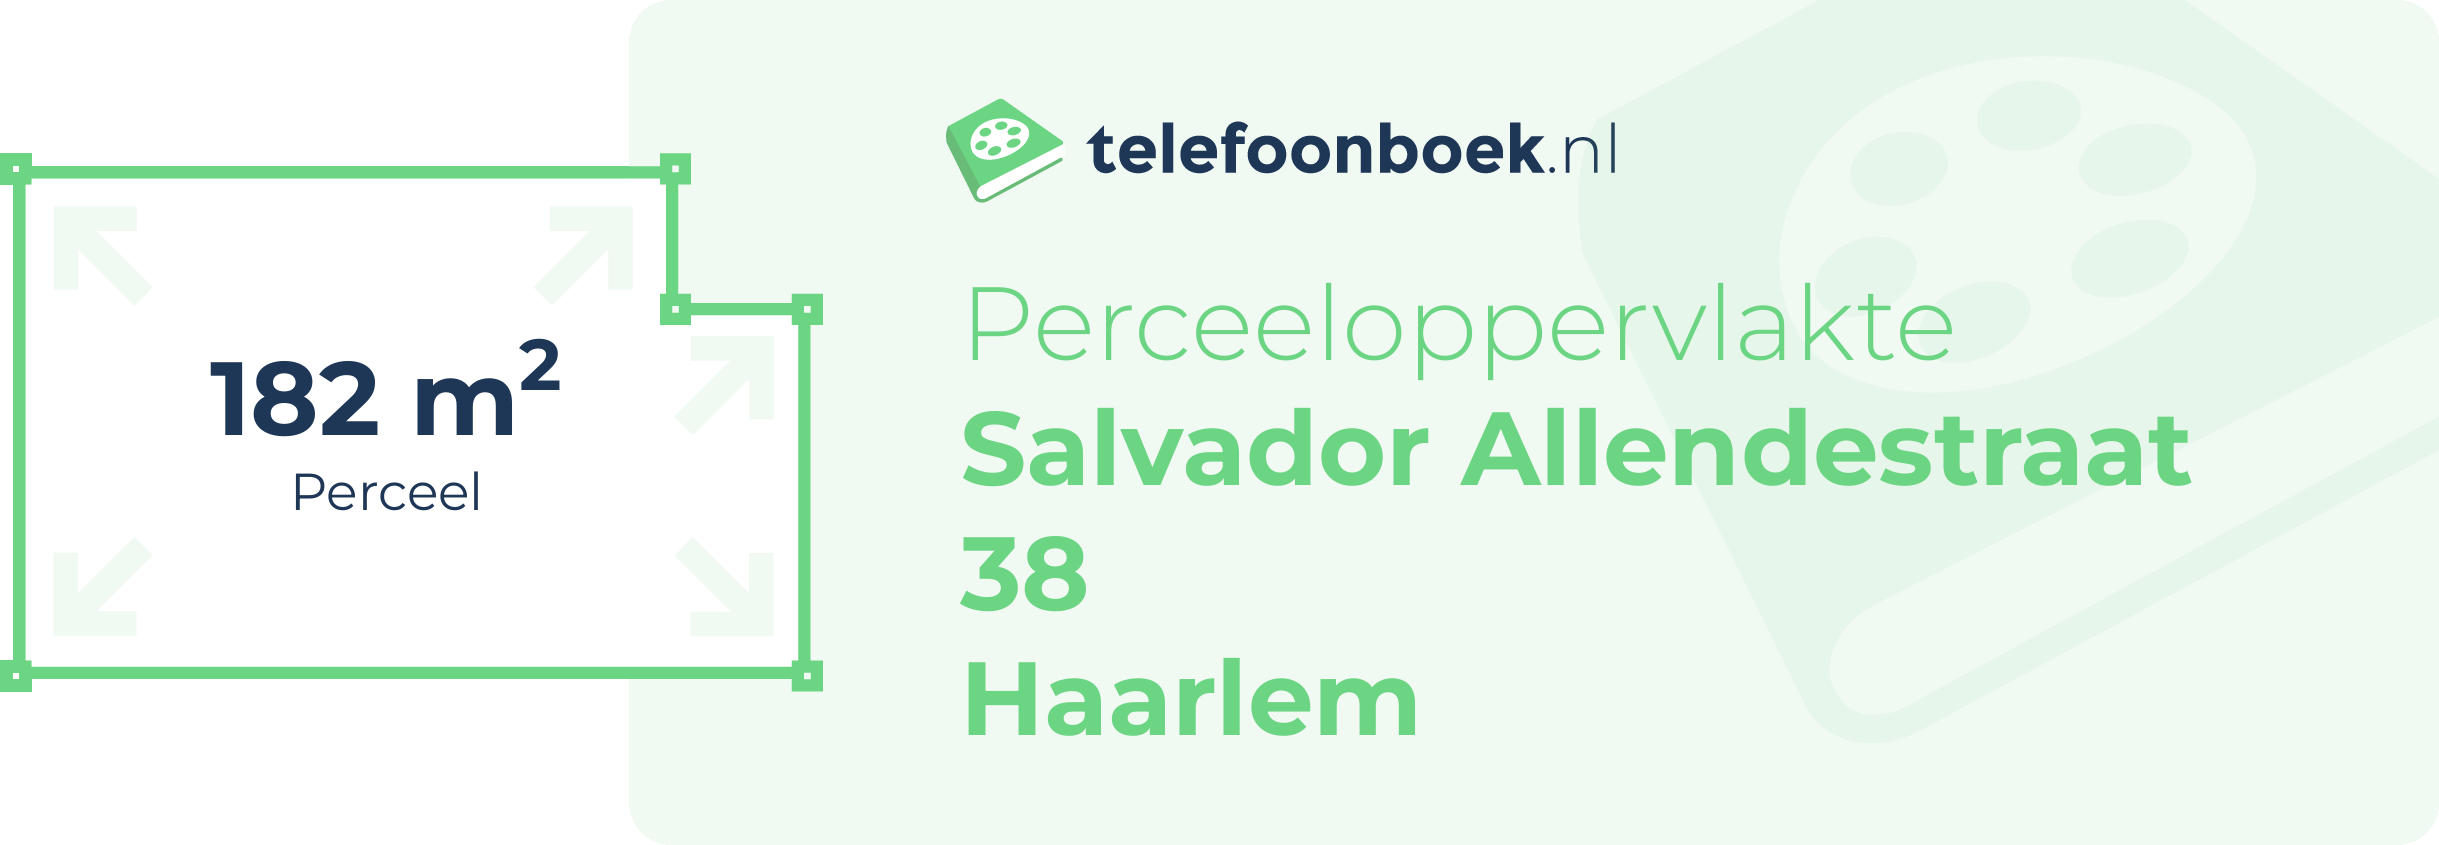 Perceeloppervlakte Salvador Allendestraat 38 Haarlem